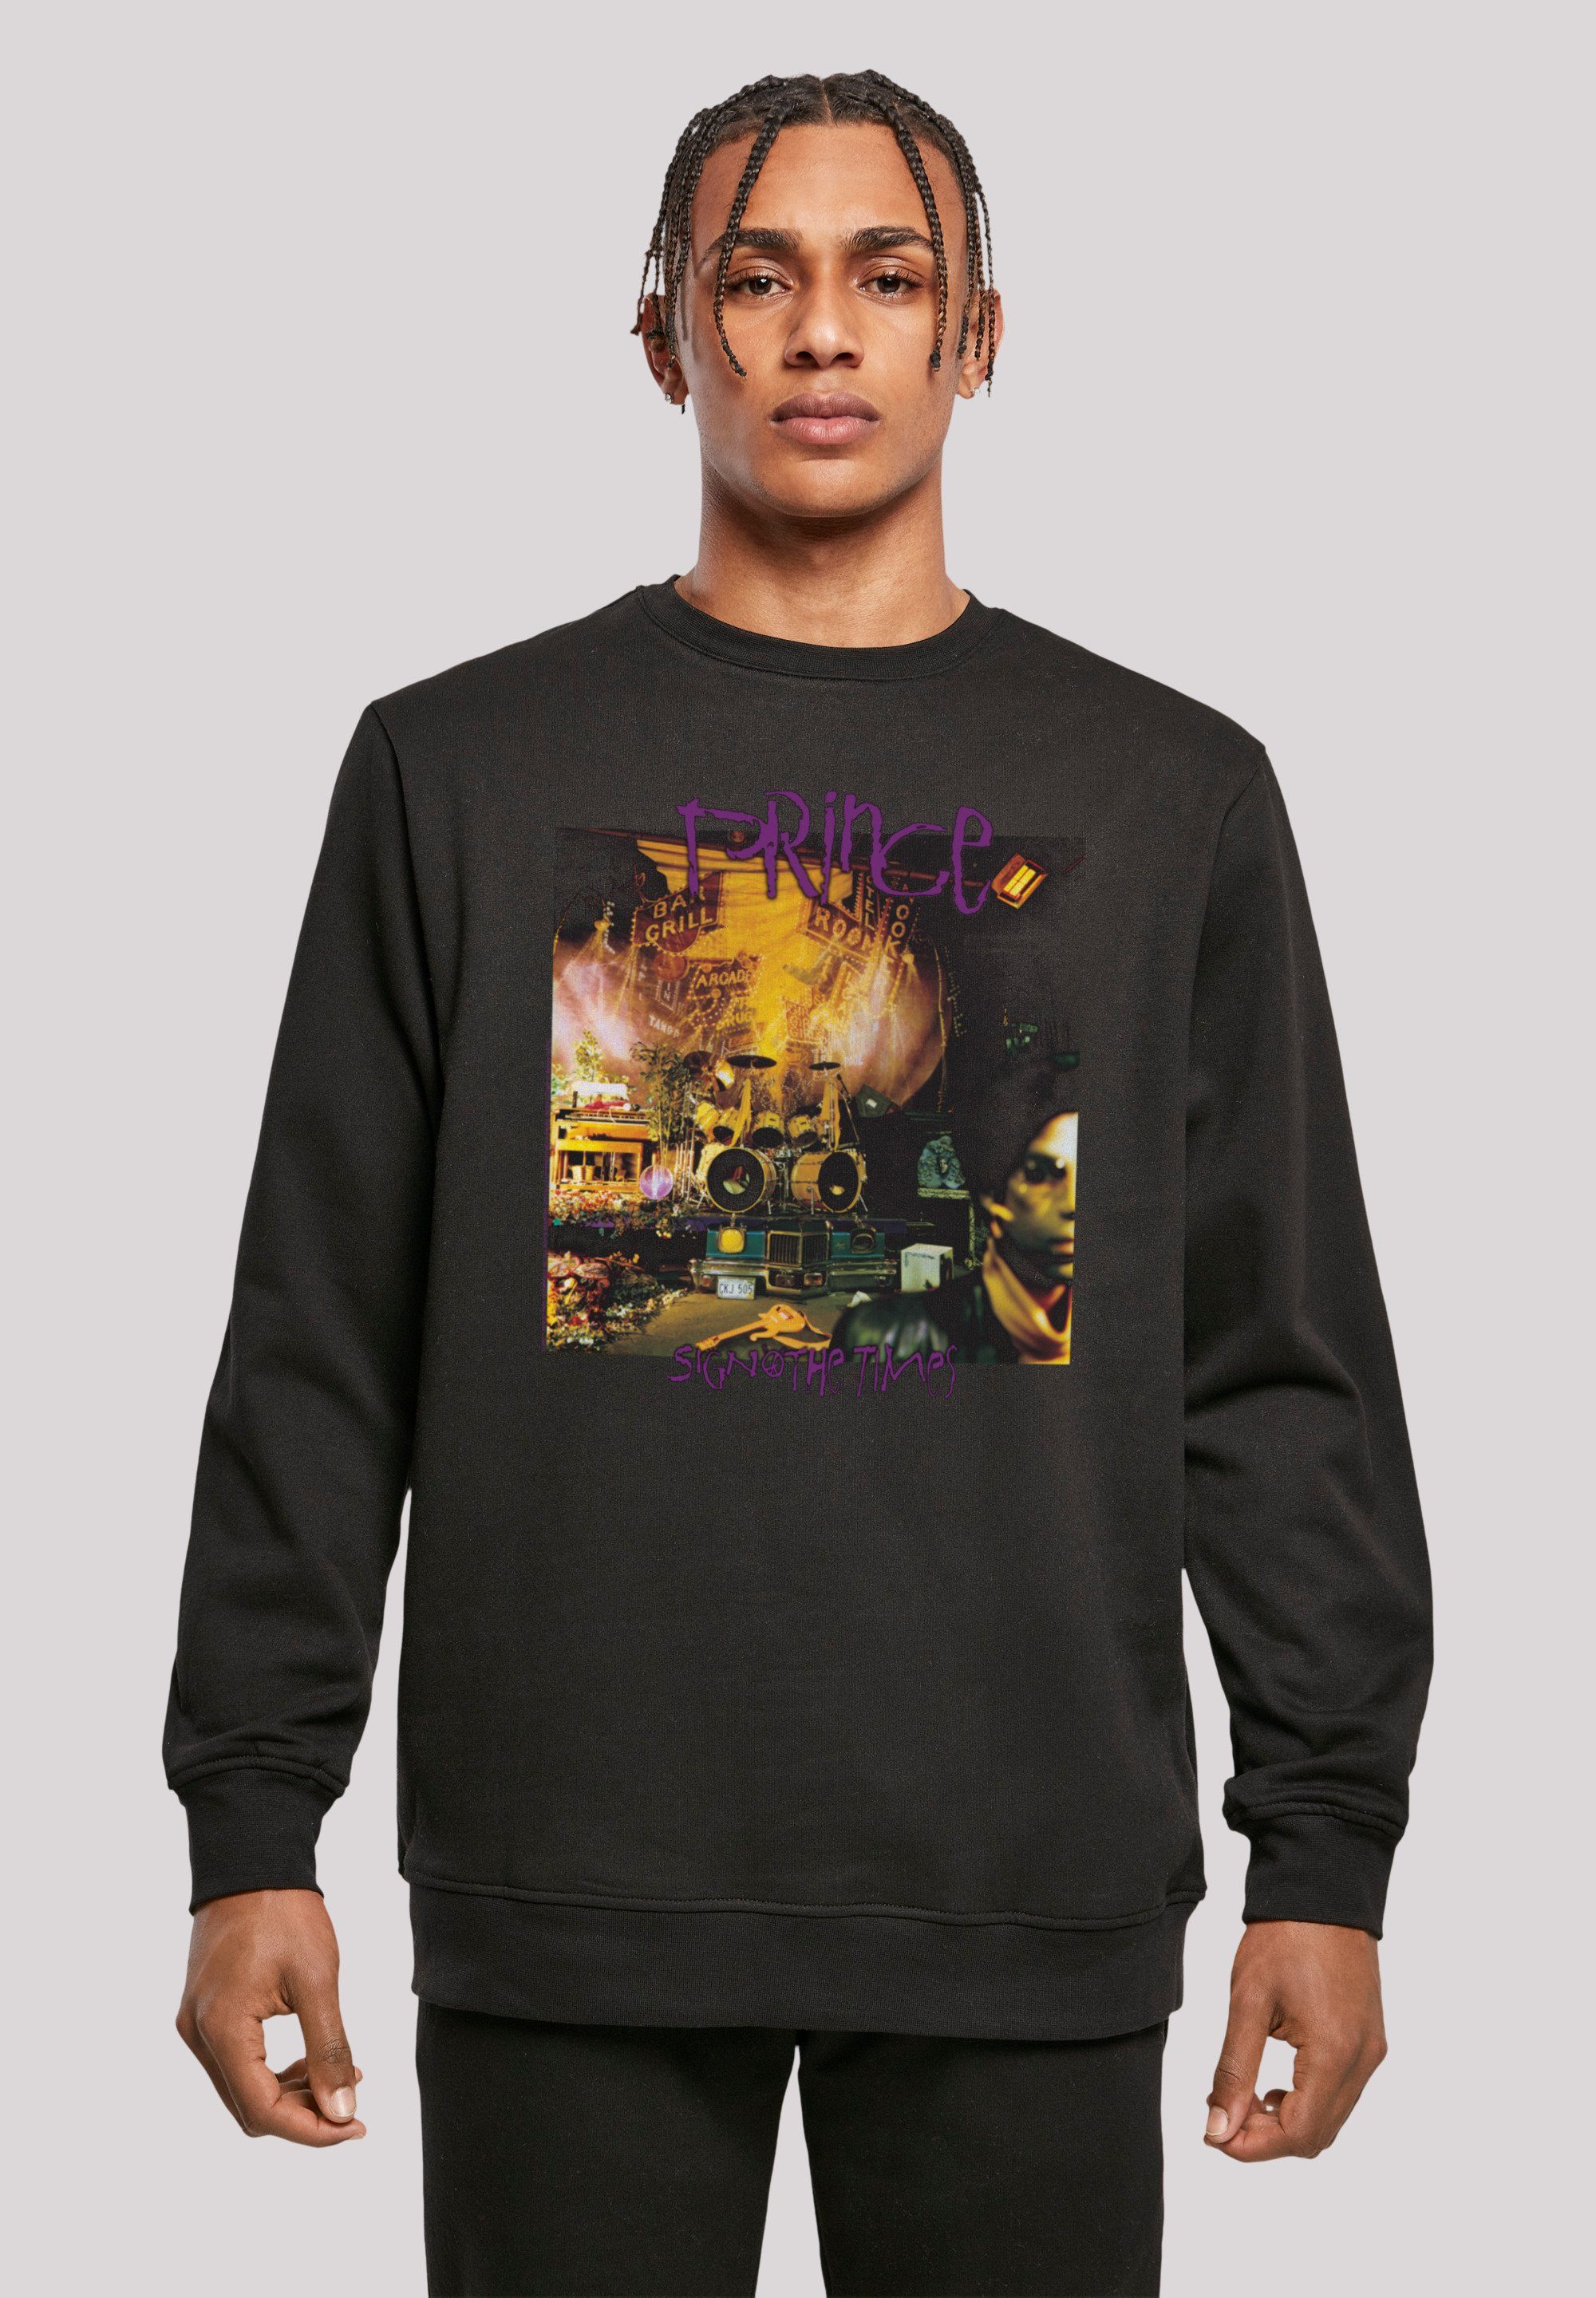 Musik Qualität, Rock-Musik, Band Sign Premium F4NT4STIC Sweatshirt The O' Times Prince